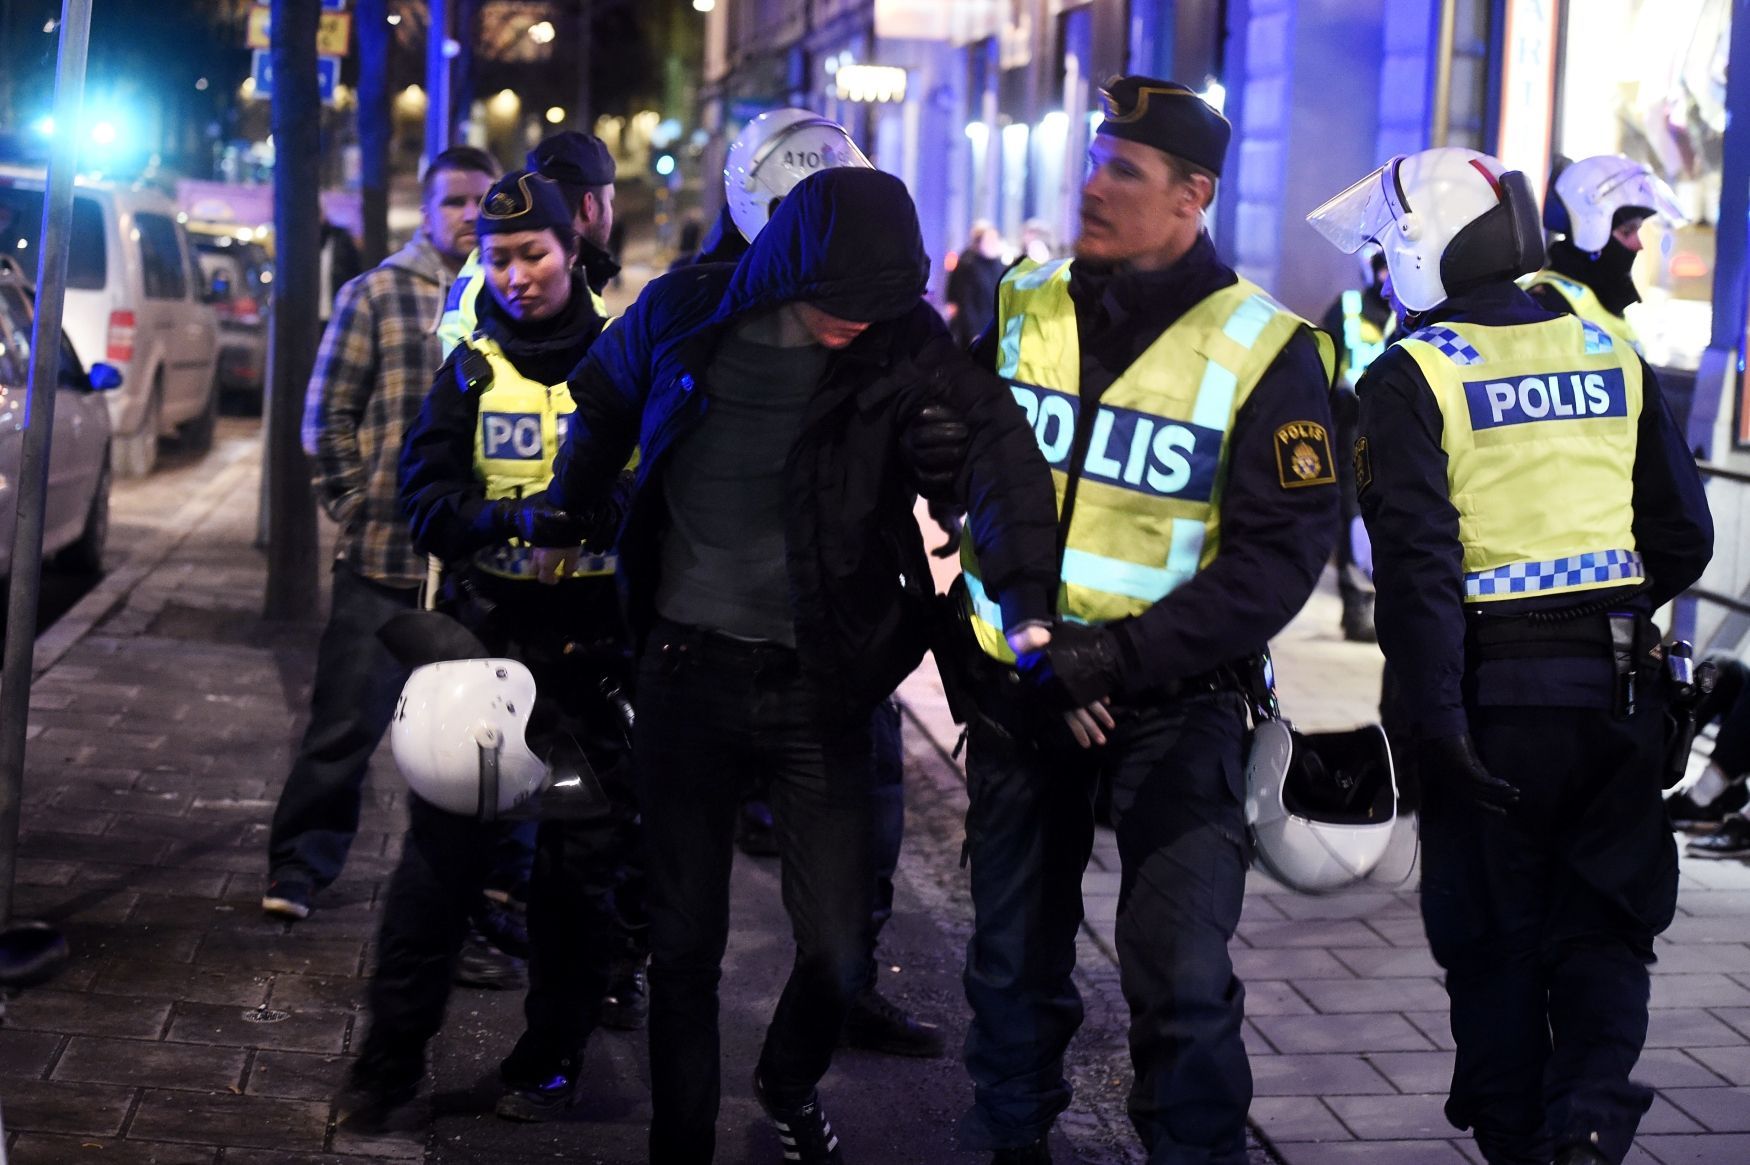 Zásah policie ve Švédsku